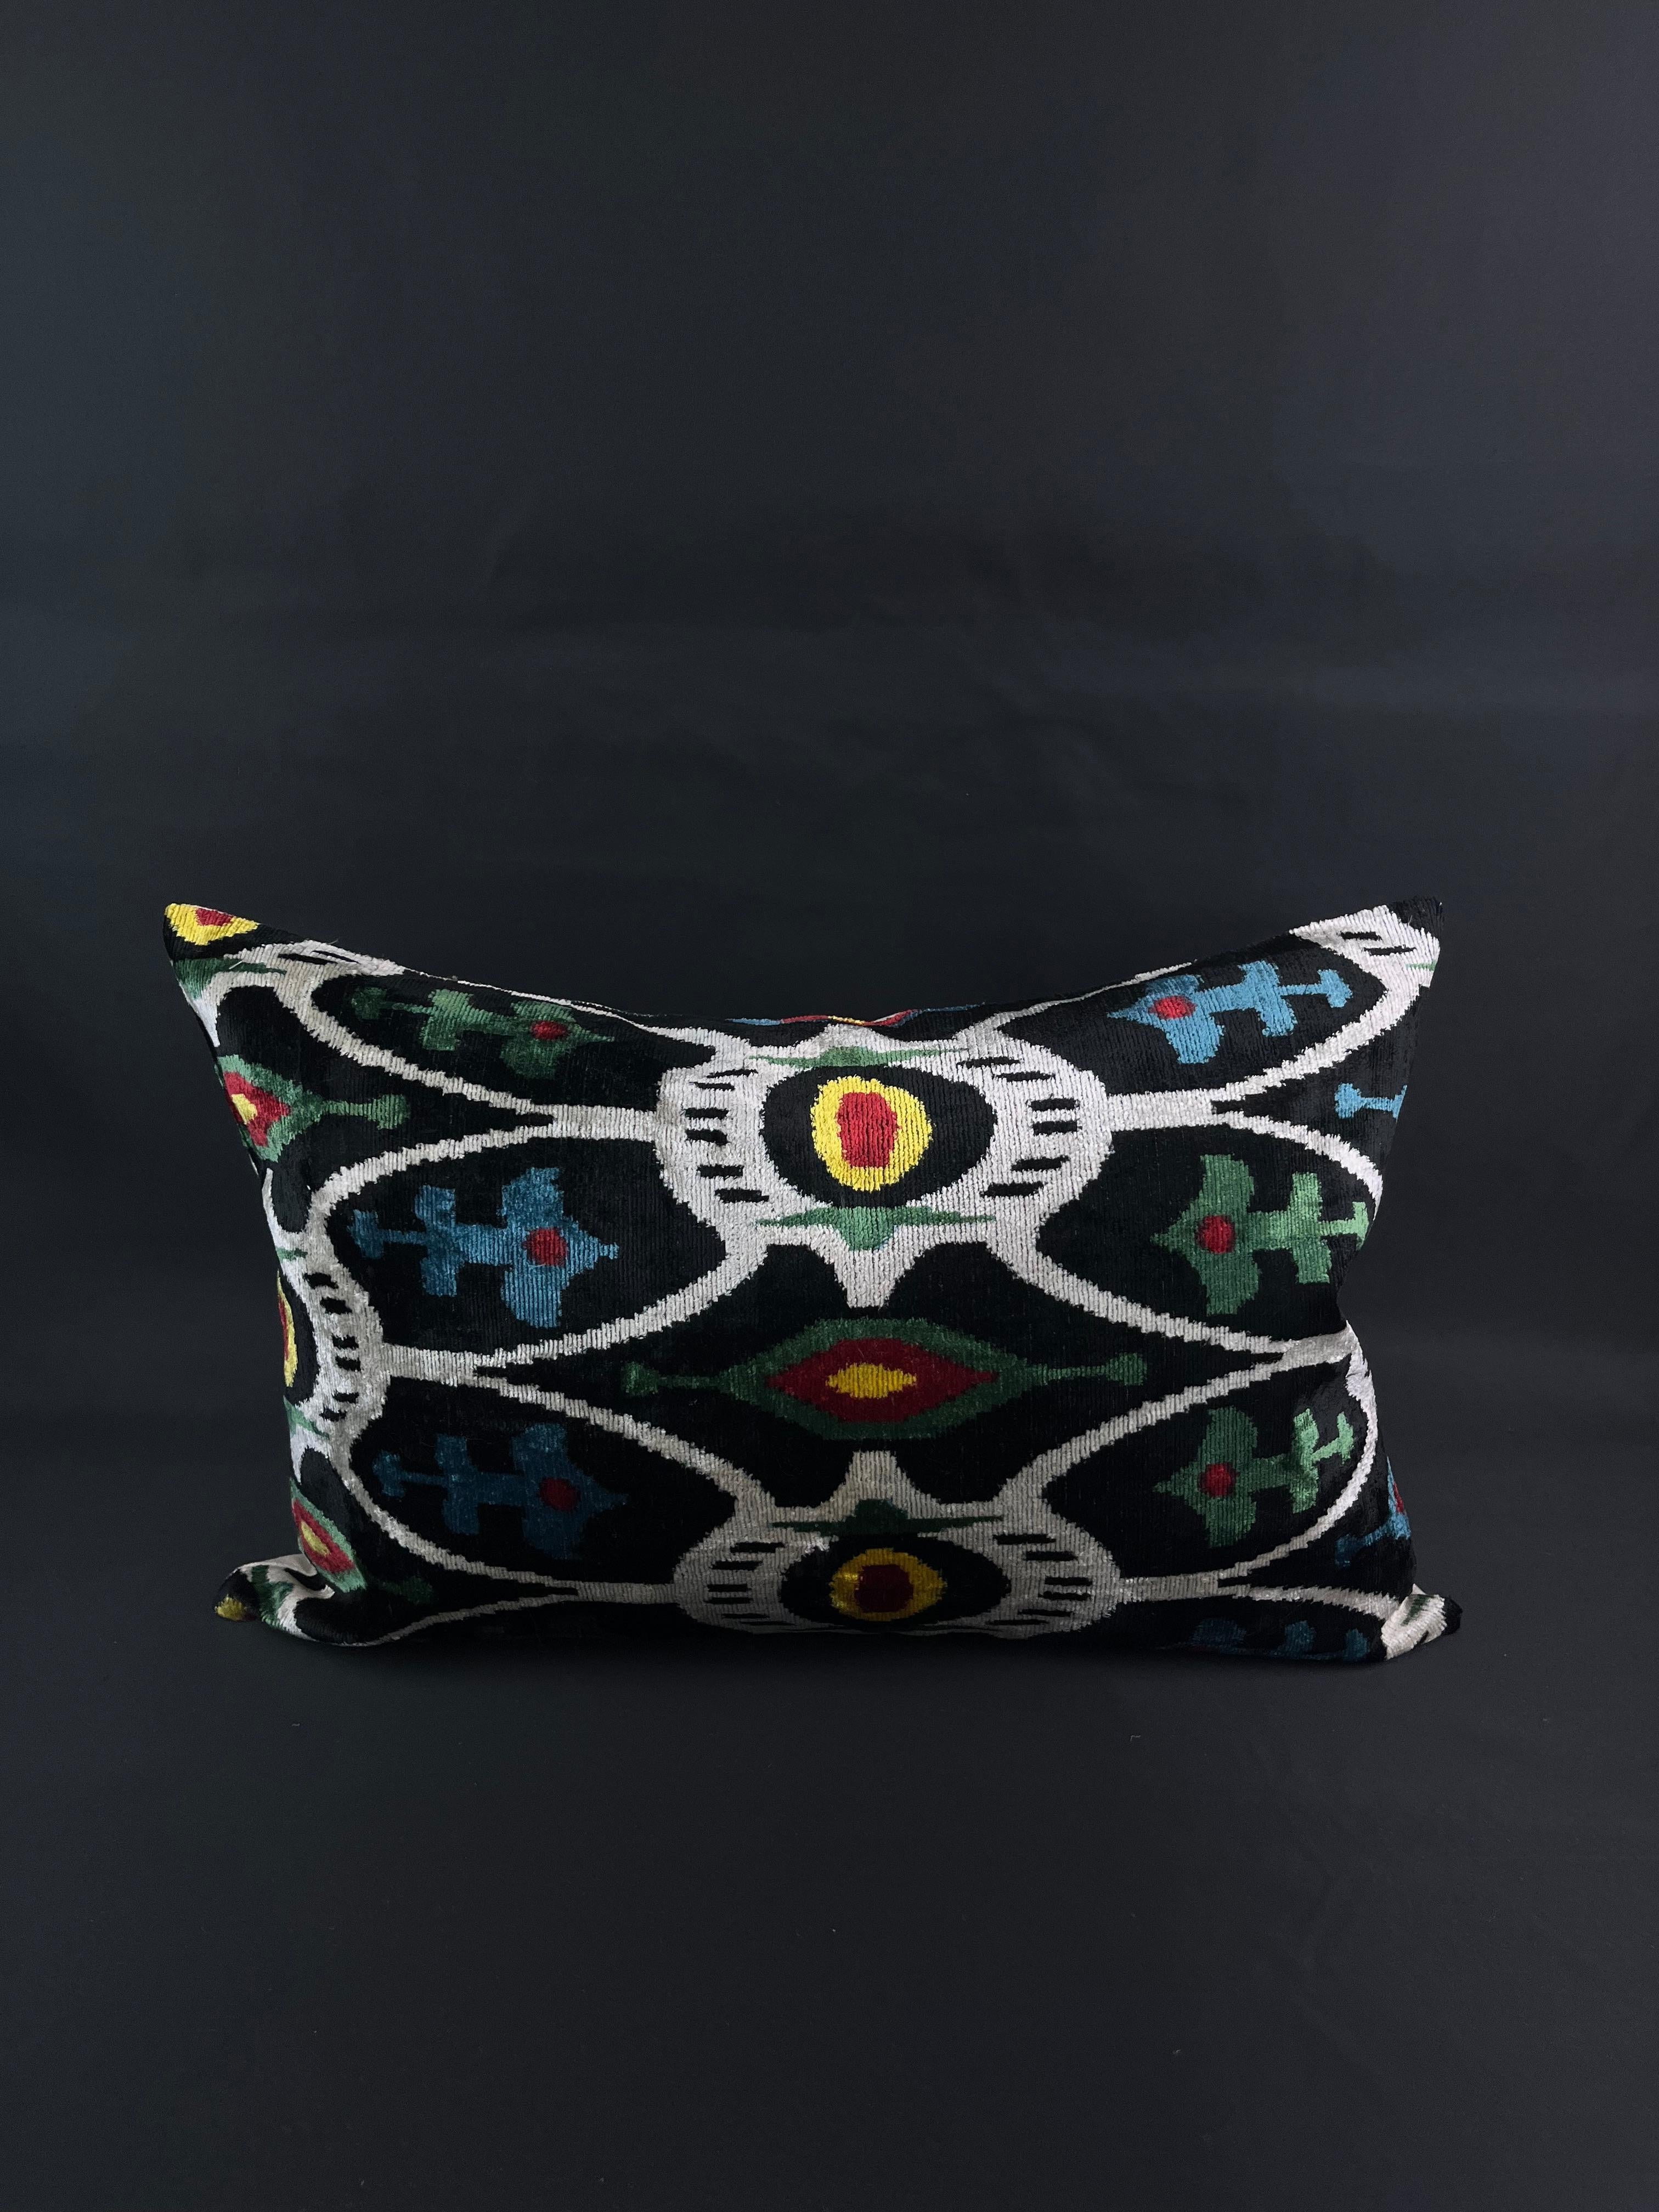 Multicolor Velvet Silk Ikat Pillow Cover In New Condition For Sale In Houston, TX